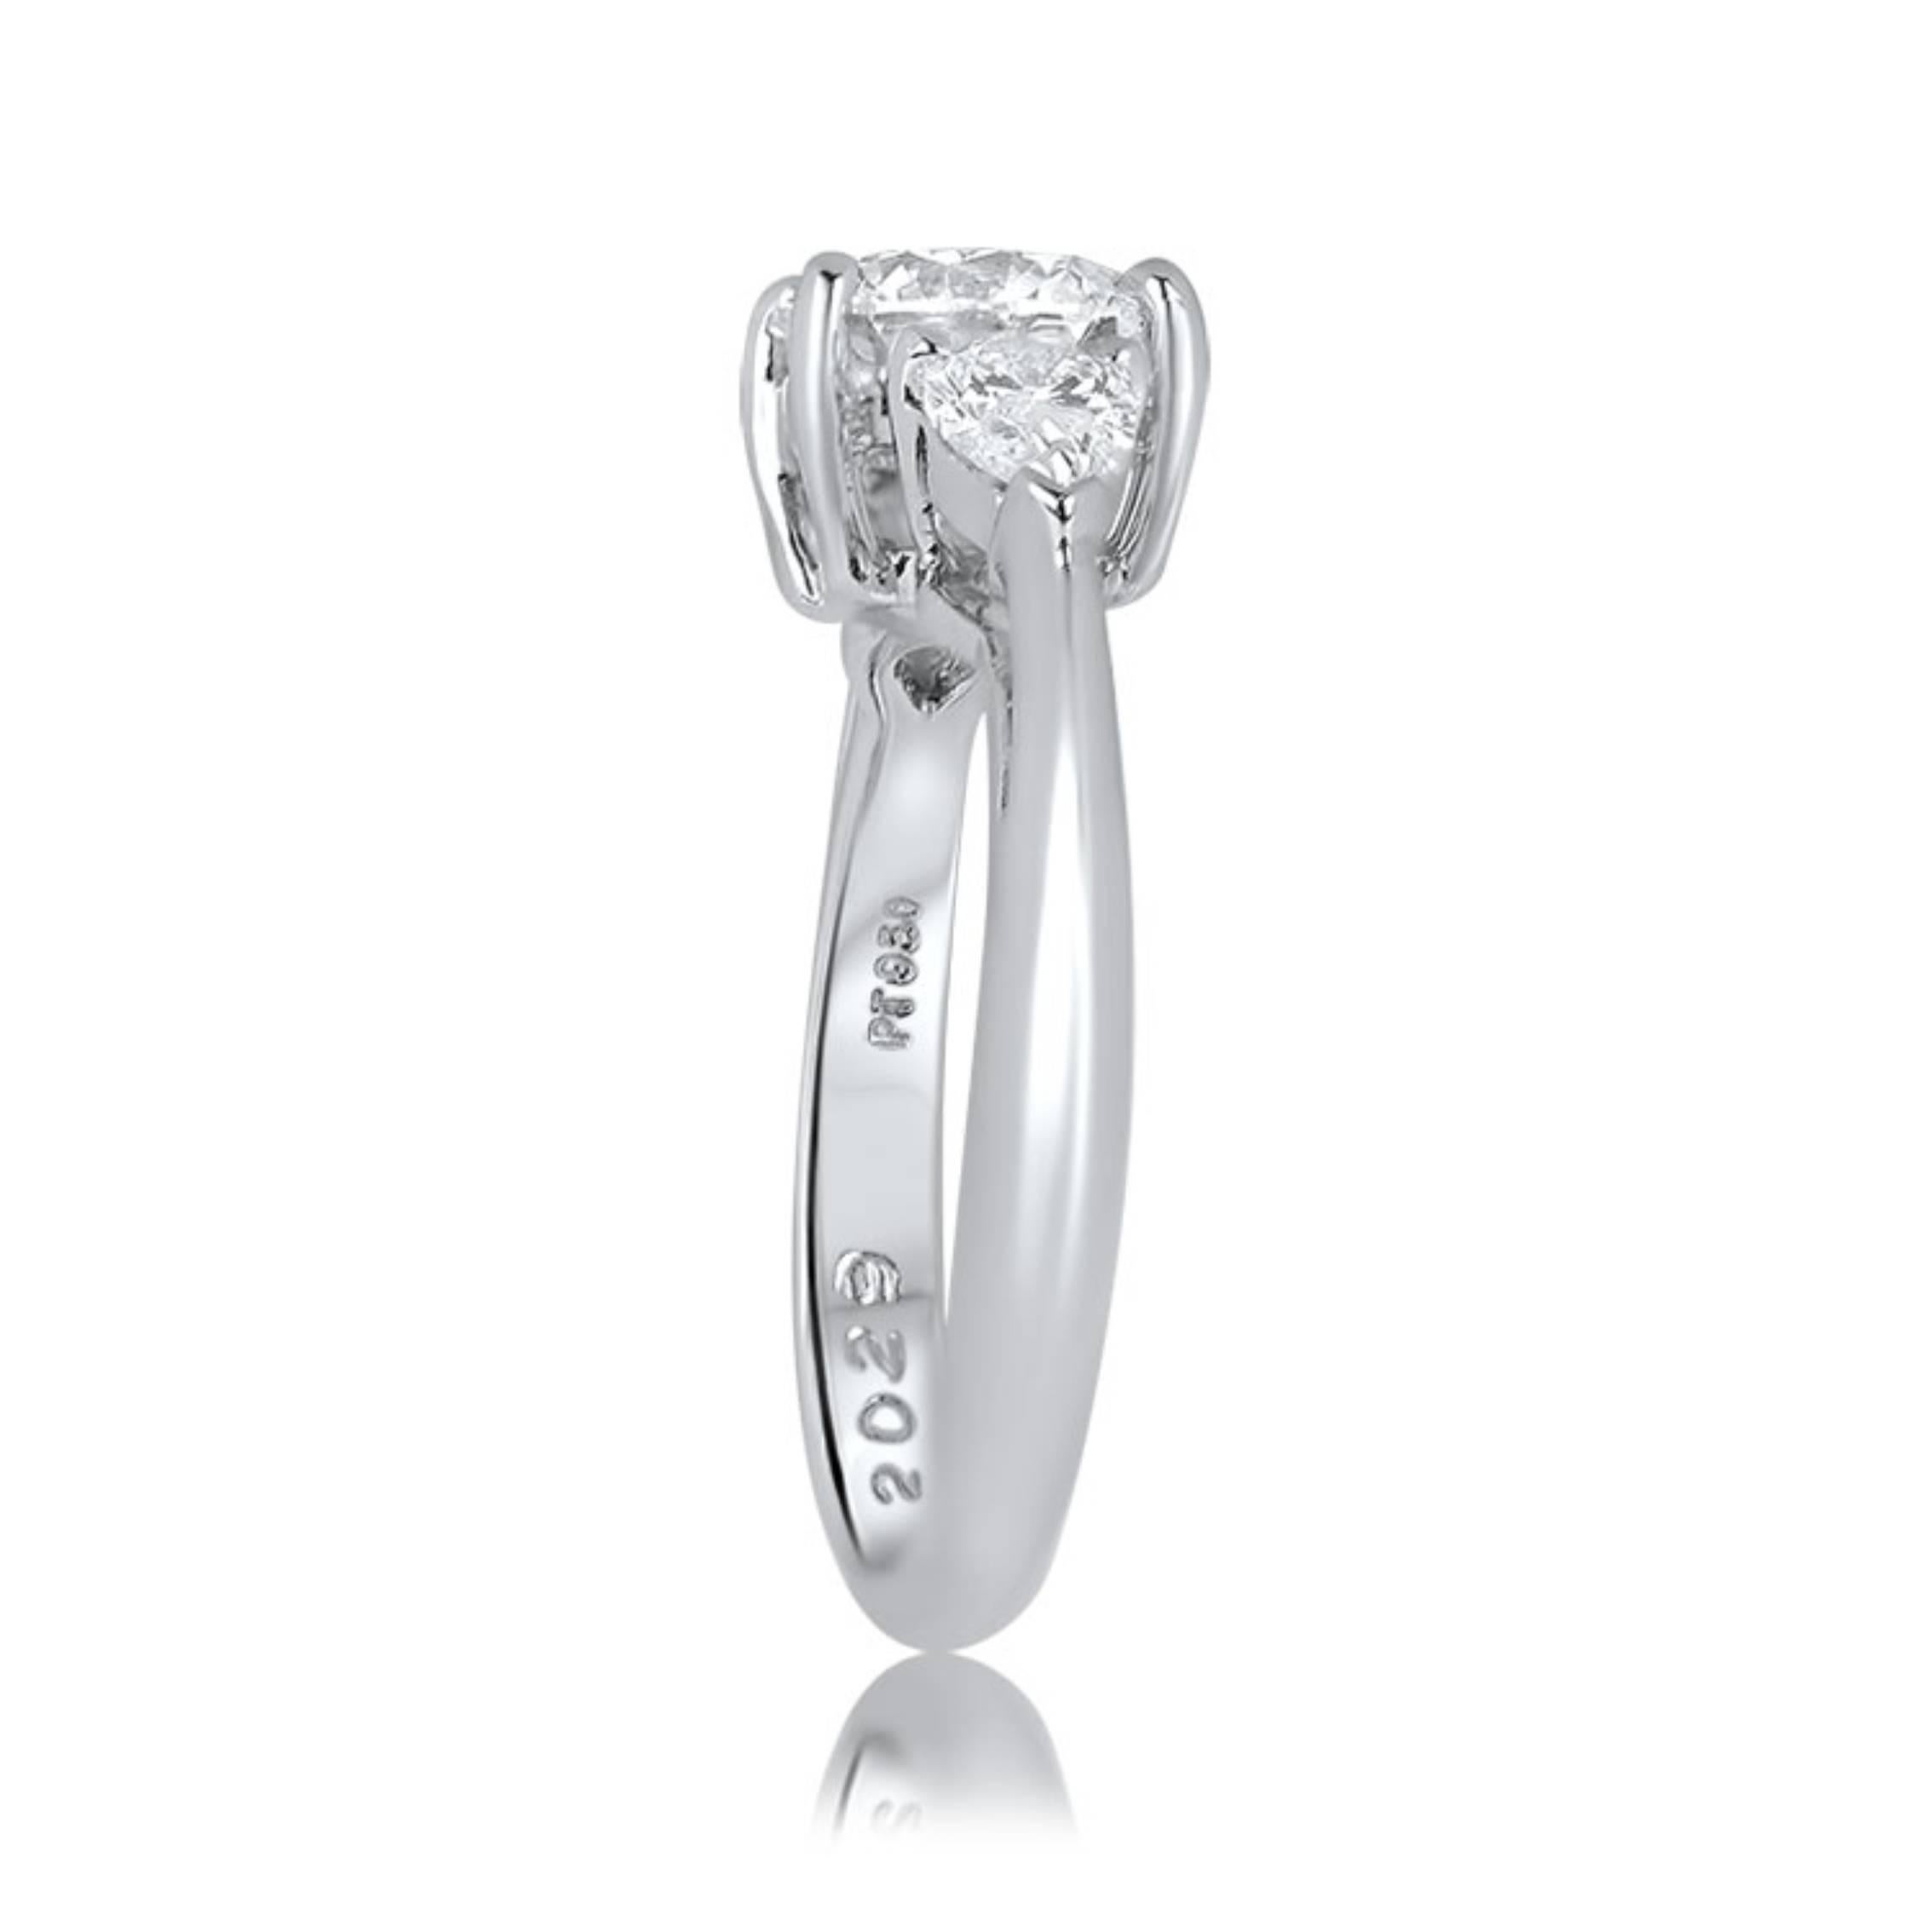 Women's Tiffany & Co. 1.04ct Brilliant Cut Diamond Engagement Ring, G Color, Platinum